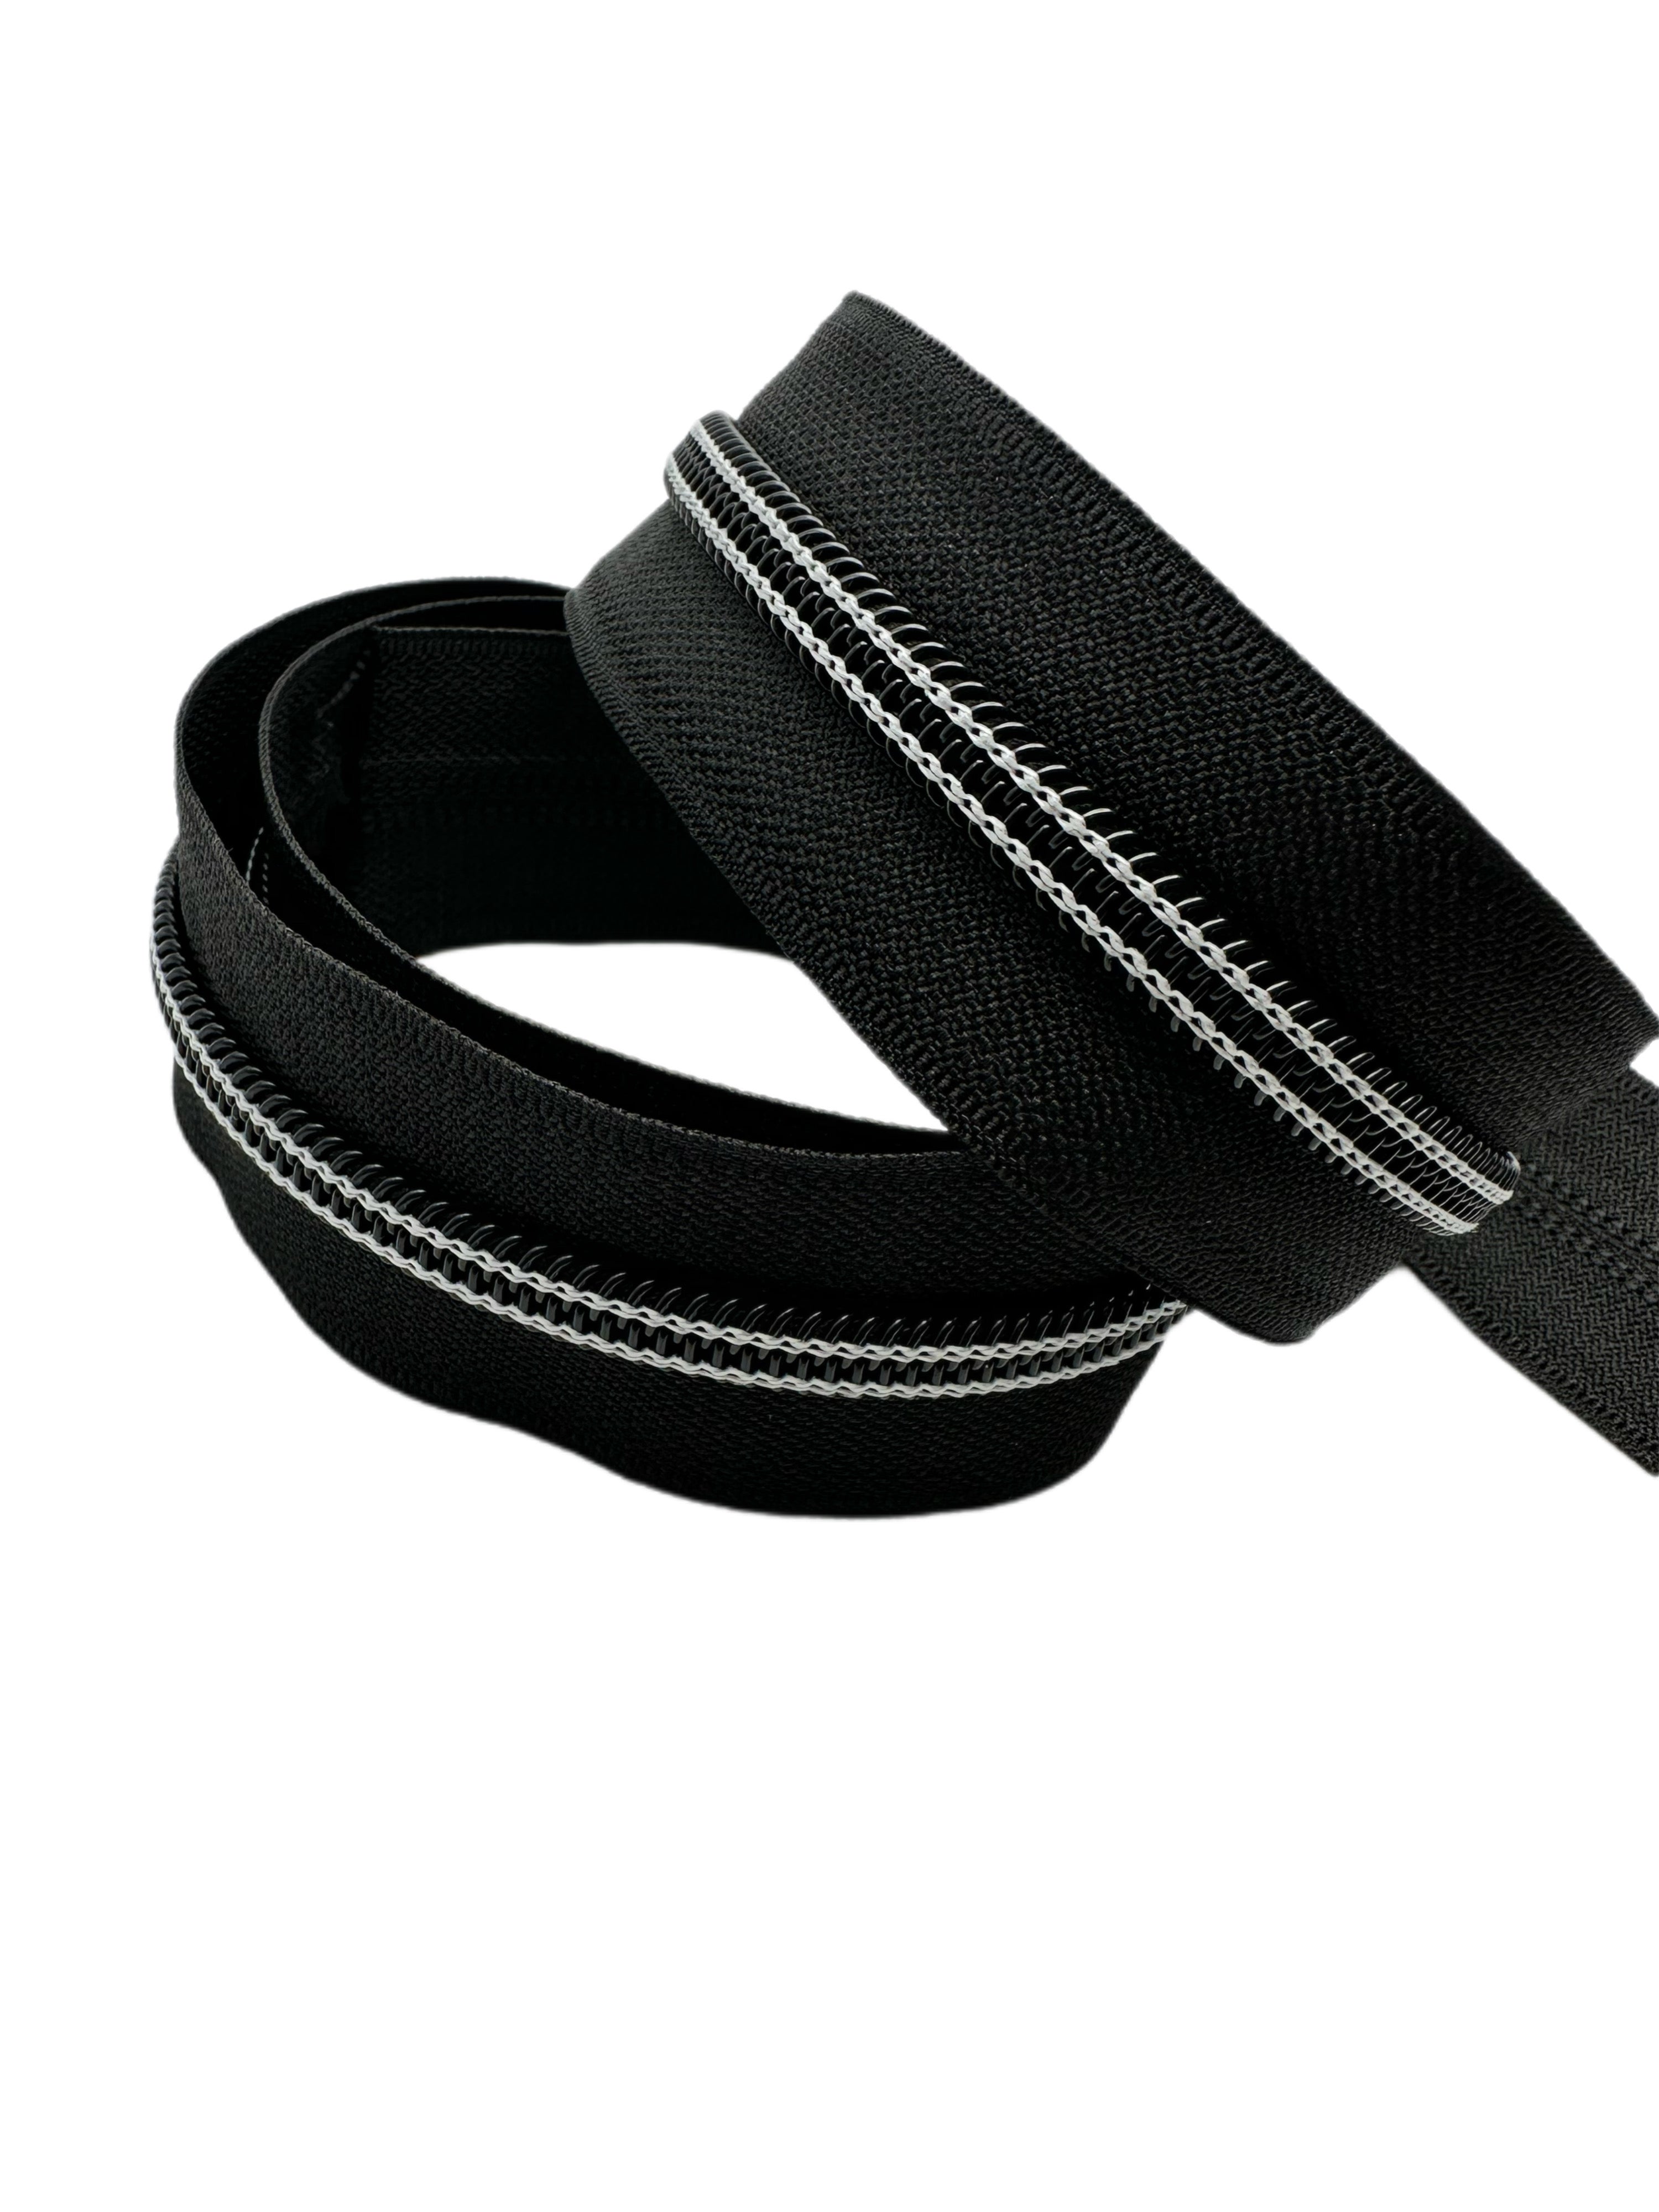 GLOW! Black zipper tape with matte black teeth